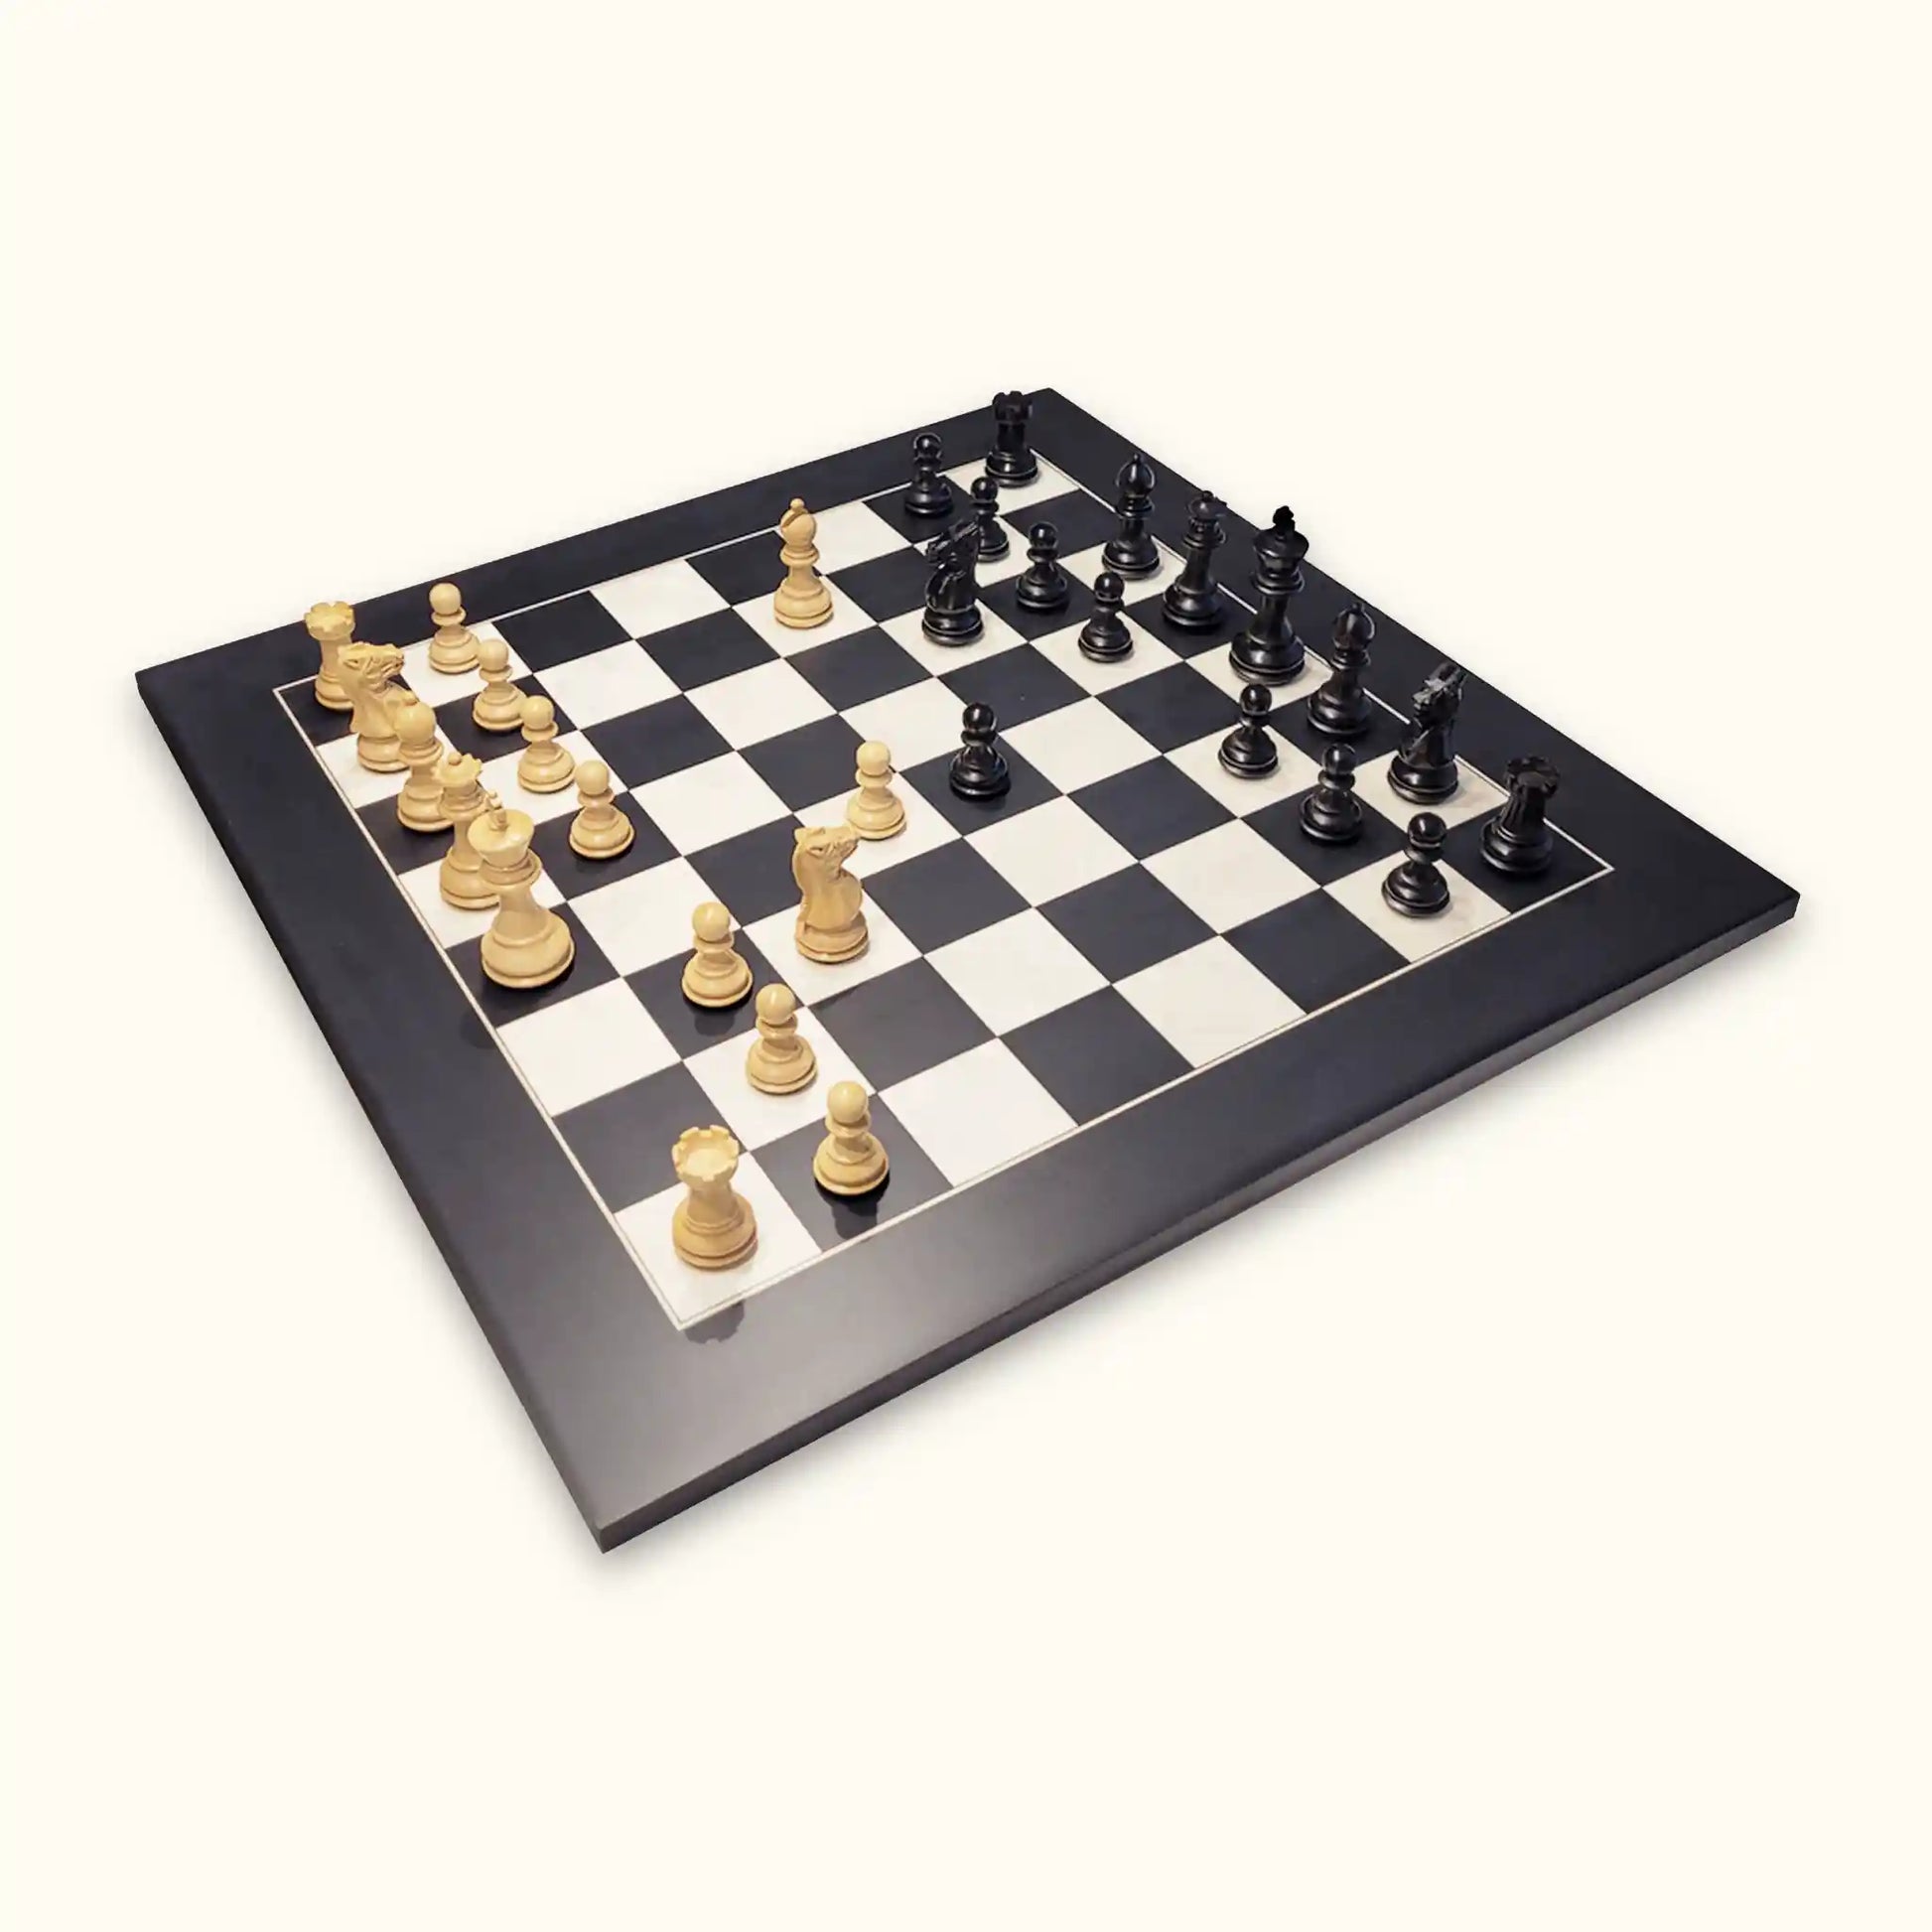 Chess pieces grace black on black chessboard diagonal